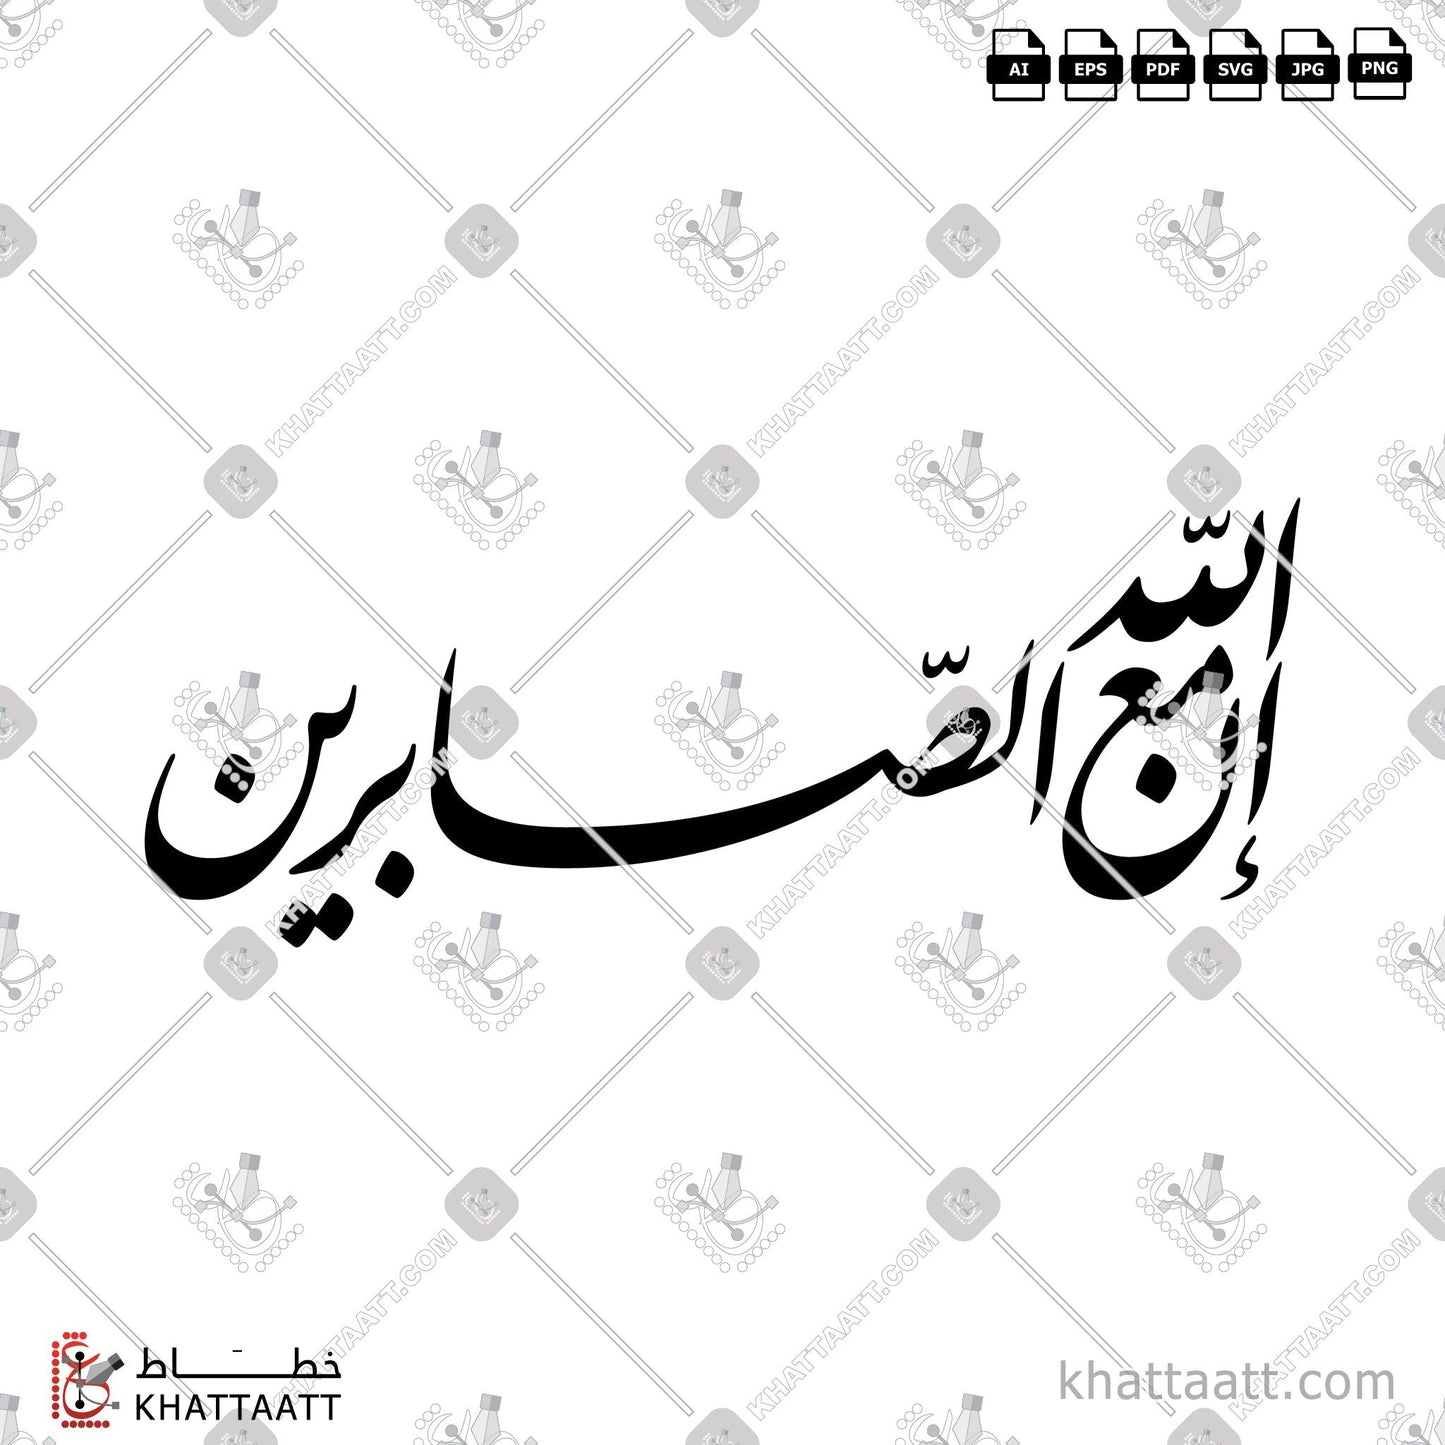 Download Arabic Calligraphy of إن الله مع الصابرين in Farsi - الخط الفارسي in vector and .png